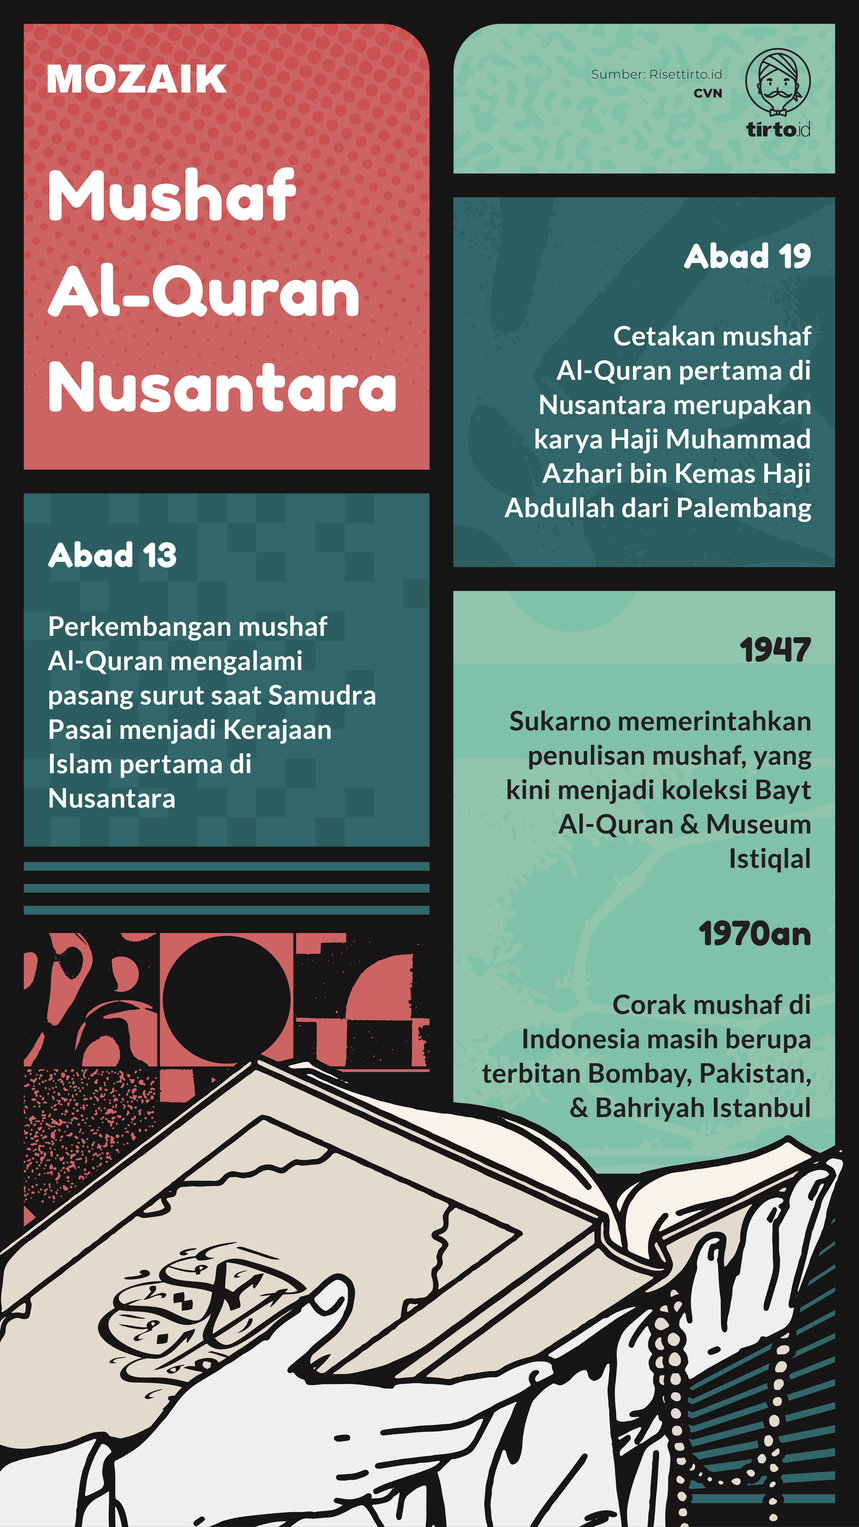 Infografik Mozaik Mushaf Al-Quran Nusantara